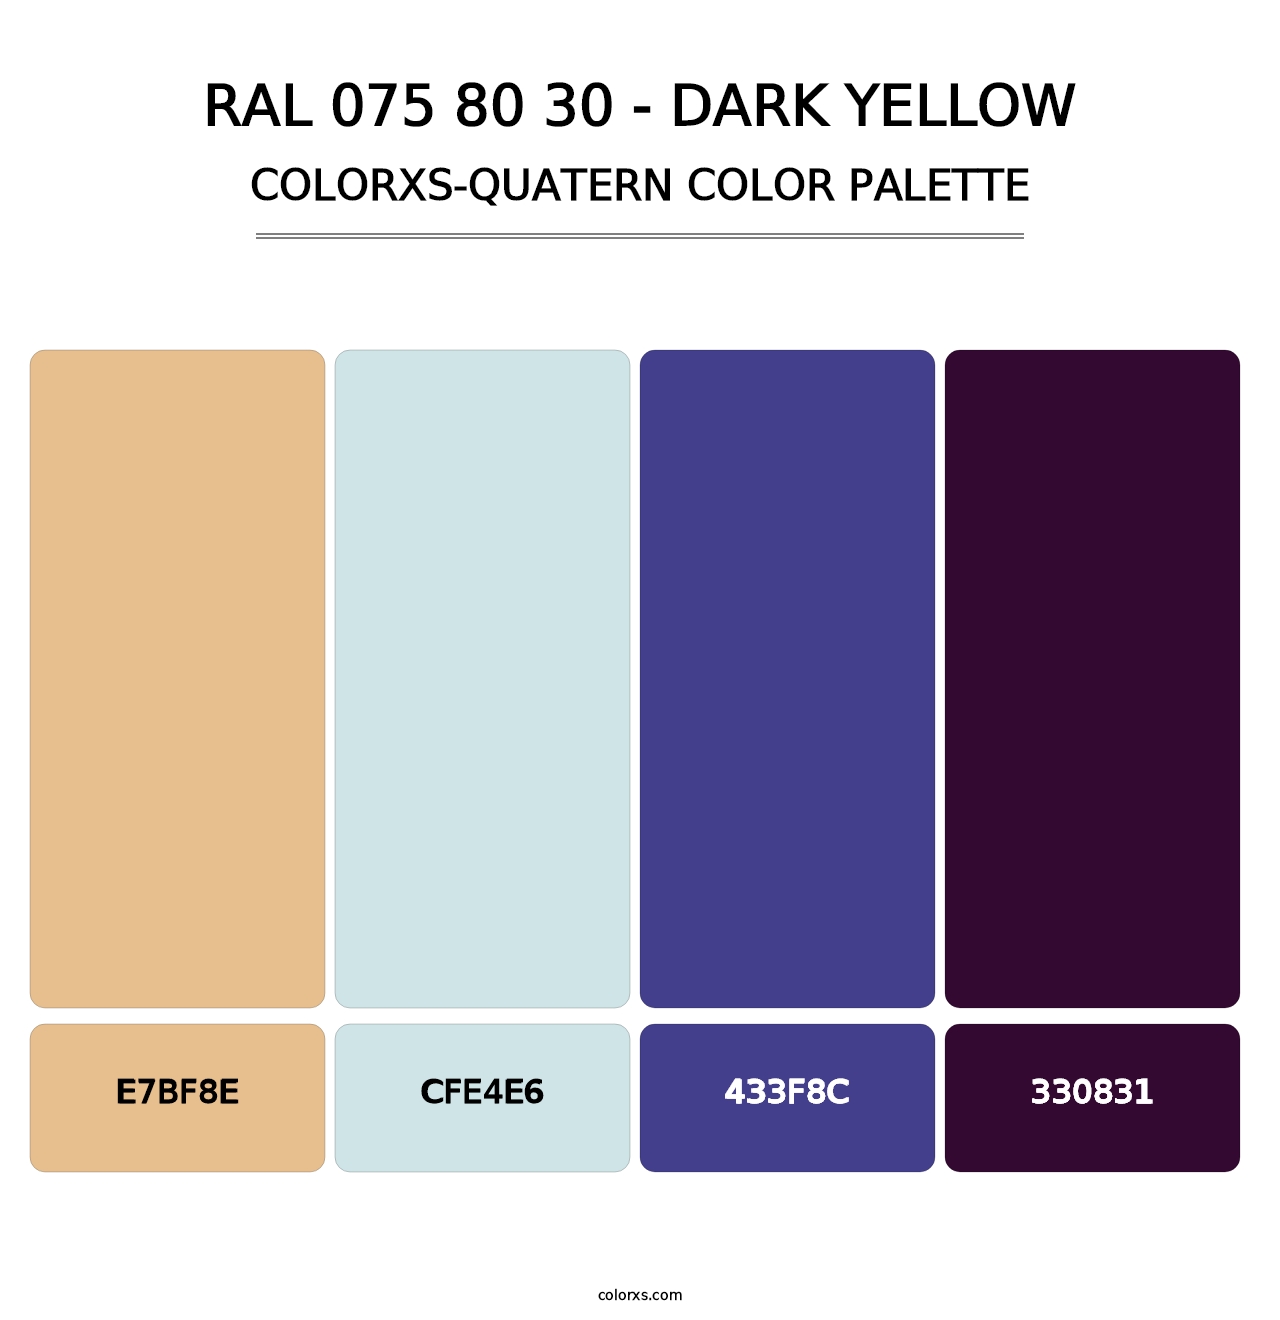 RAL 075 80 30 - Dark Yellow - Colorxs Quatern Palette